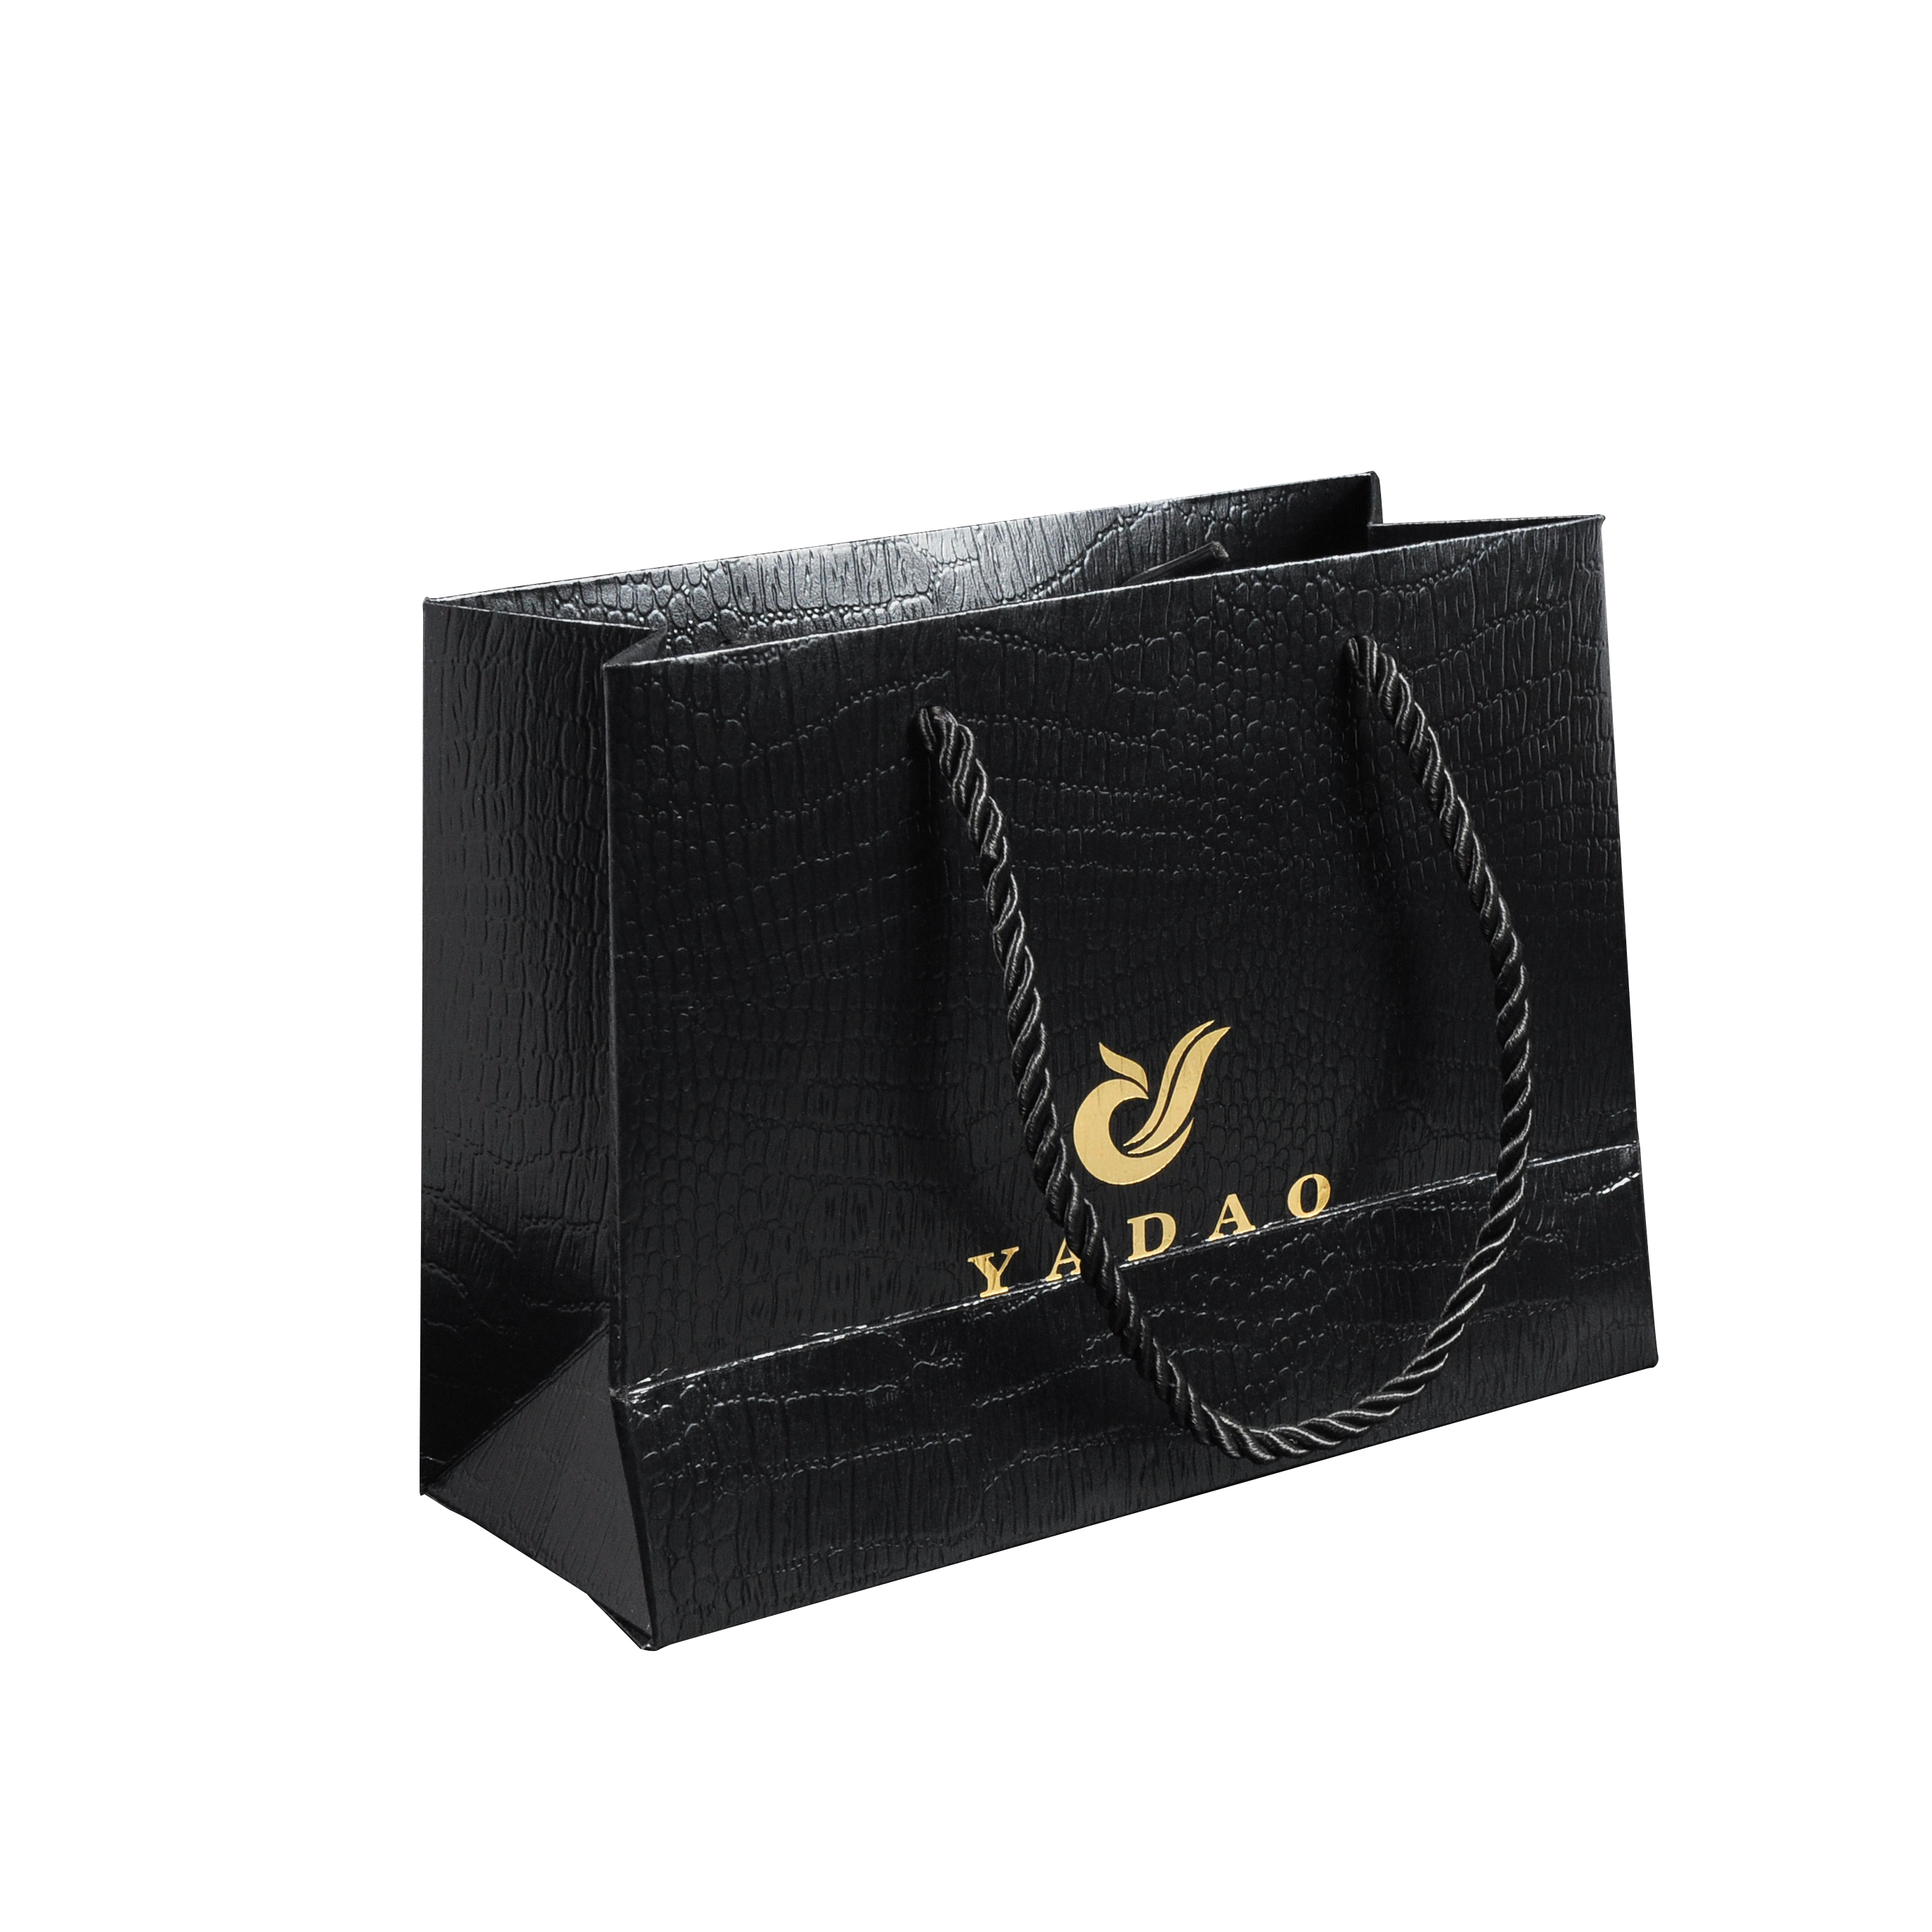 YADAO ประเทศจีนโลโก้ที่กำหนดเองผู้ผลิตเครื่องประดับเม็ดจระเข้ UV บรรจุภัณฑ์ของขวัญกระเป๋าถือปั๊มร้อนสีดำสาวถุงกระดาษช้อปปิ้ง